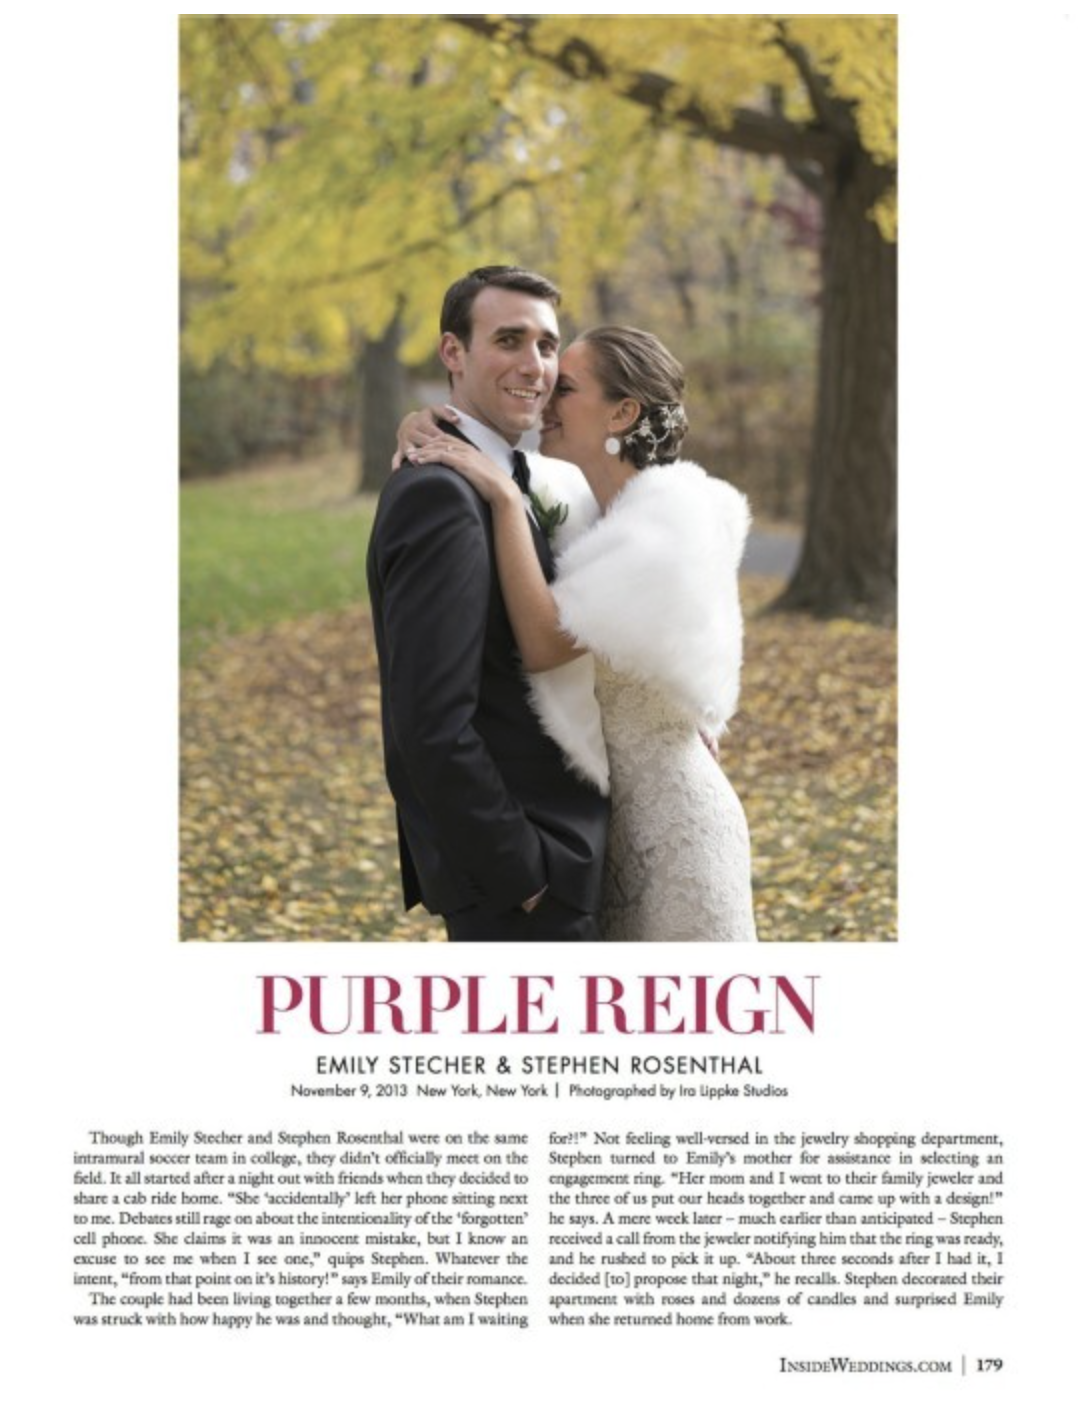 Inside Wedding Magazine Wedding Feature - 2